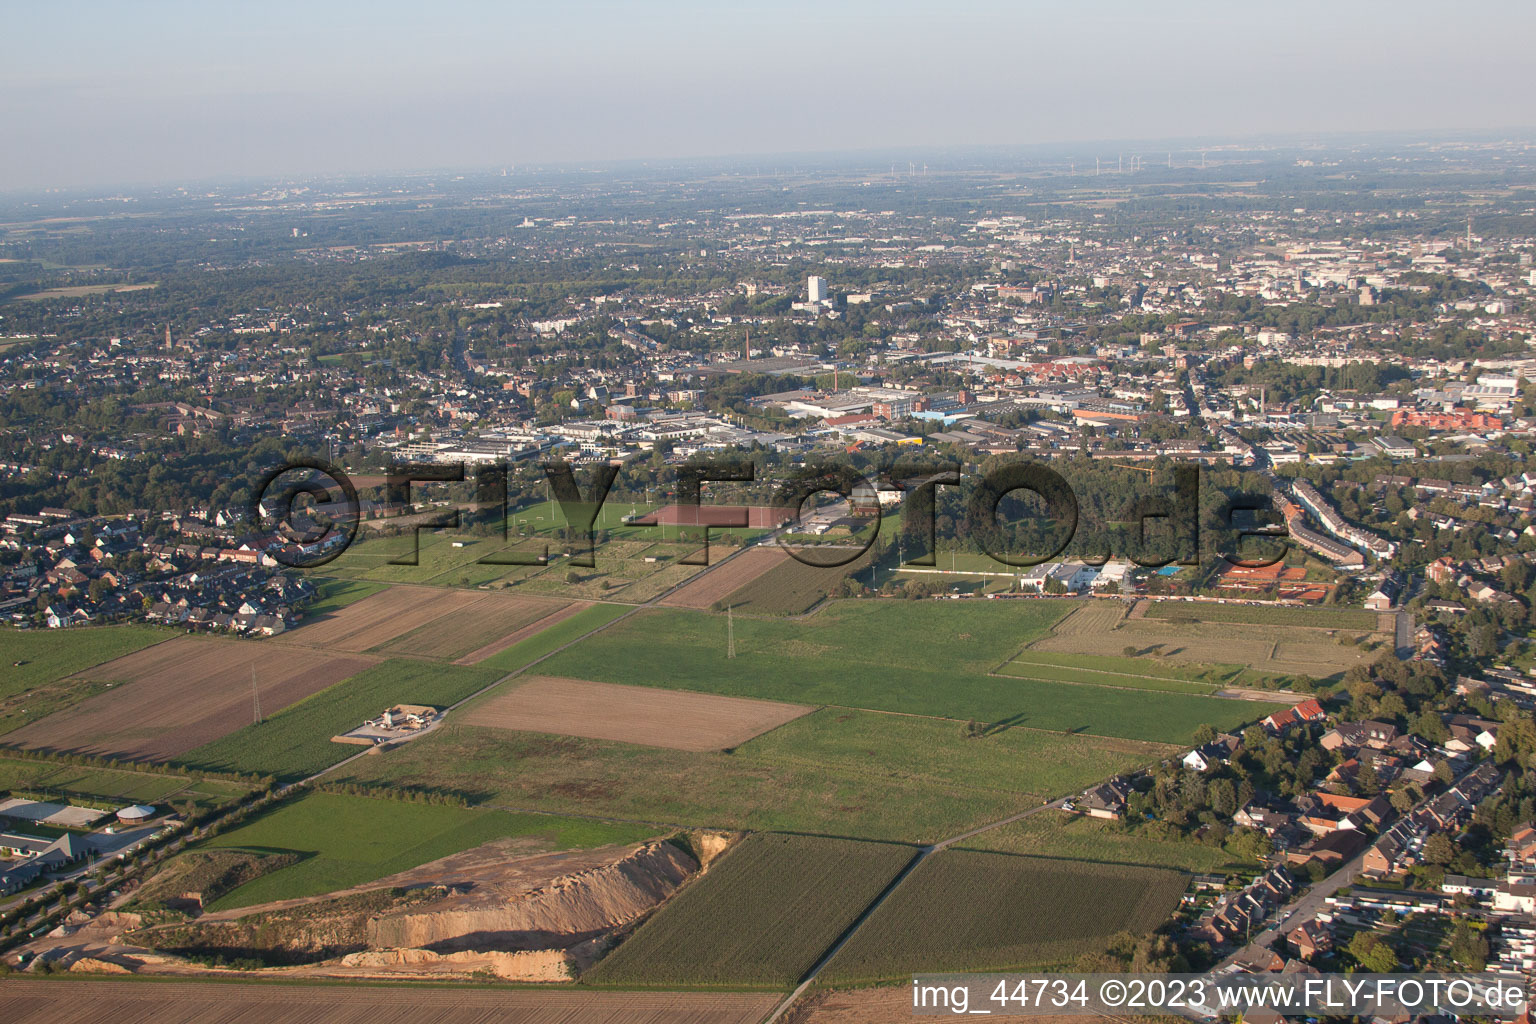 Oblique view of Mönchengladbach in the state North Rhine-Westphalia, Germany